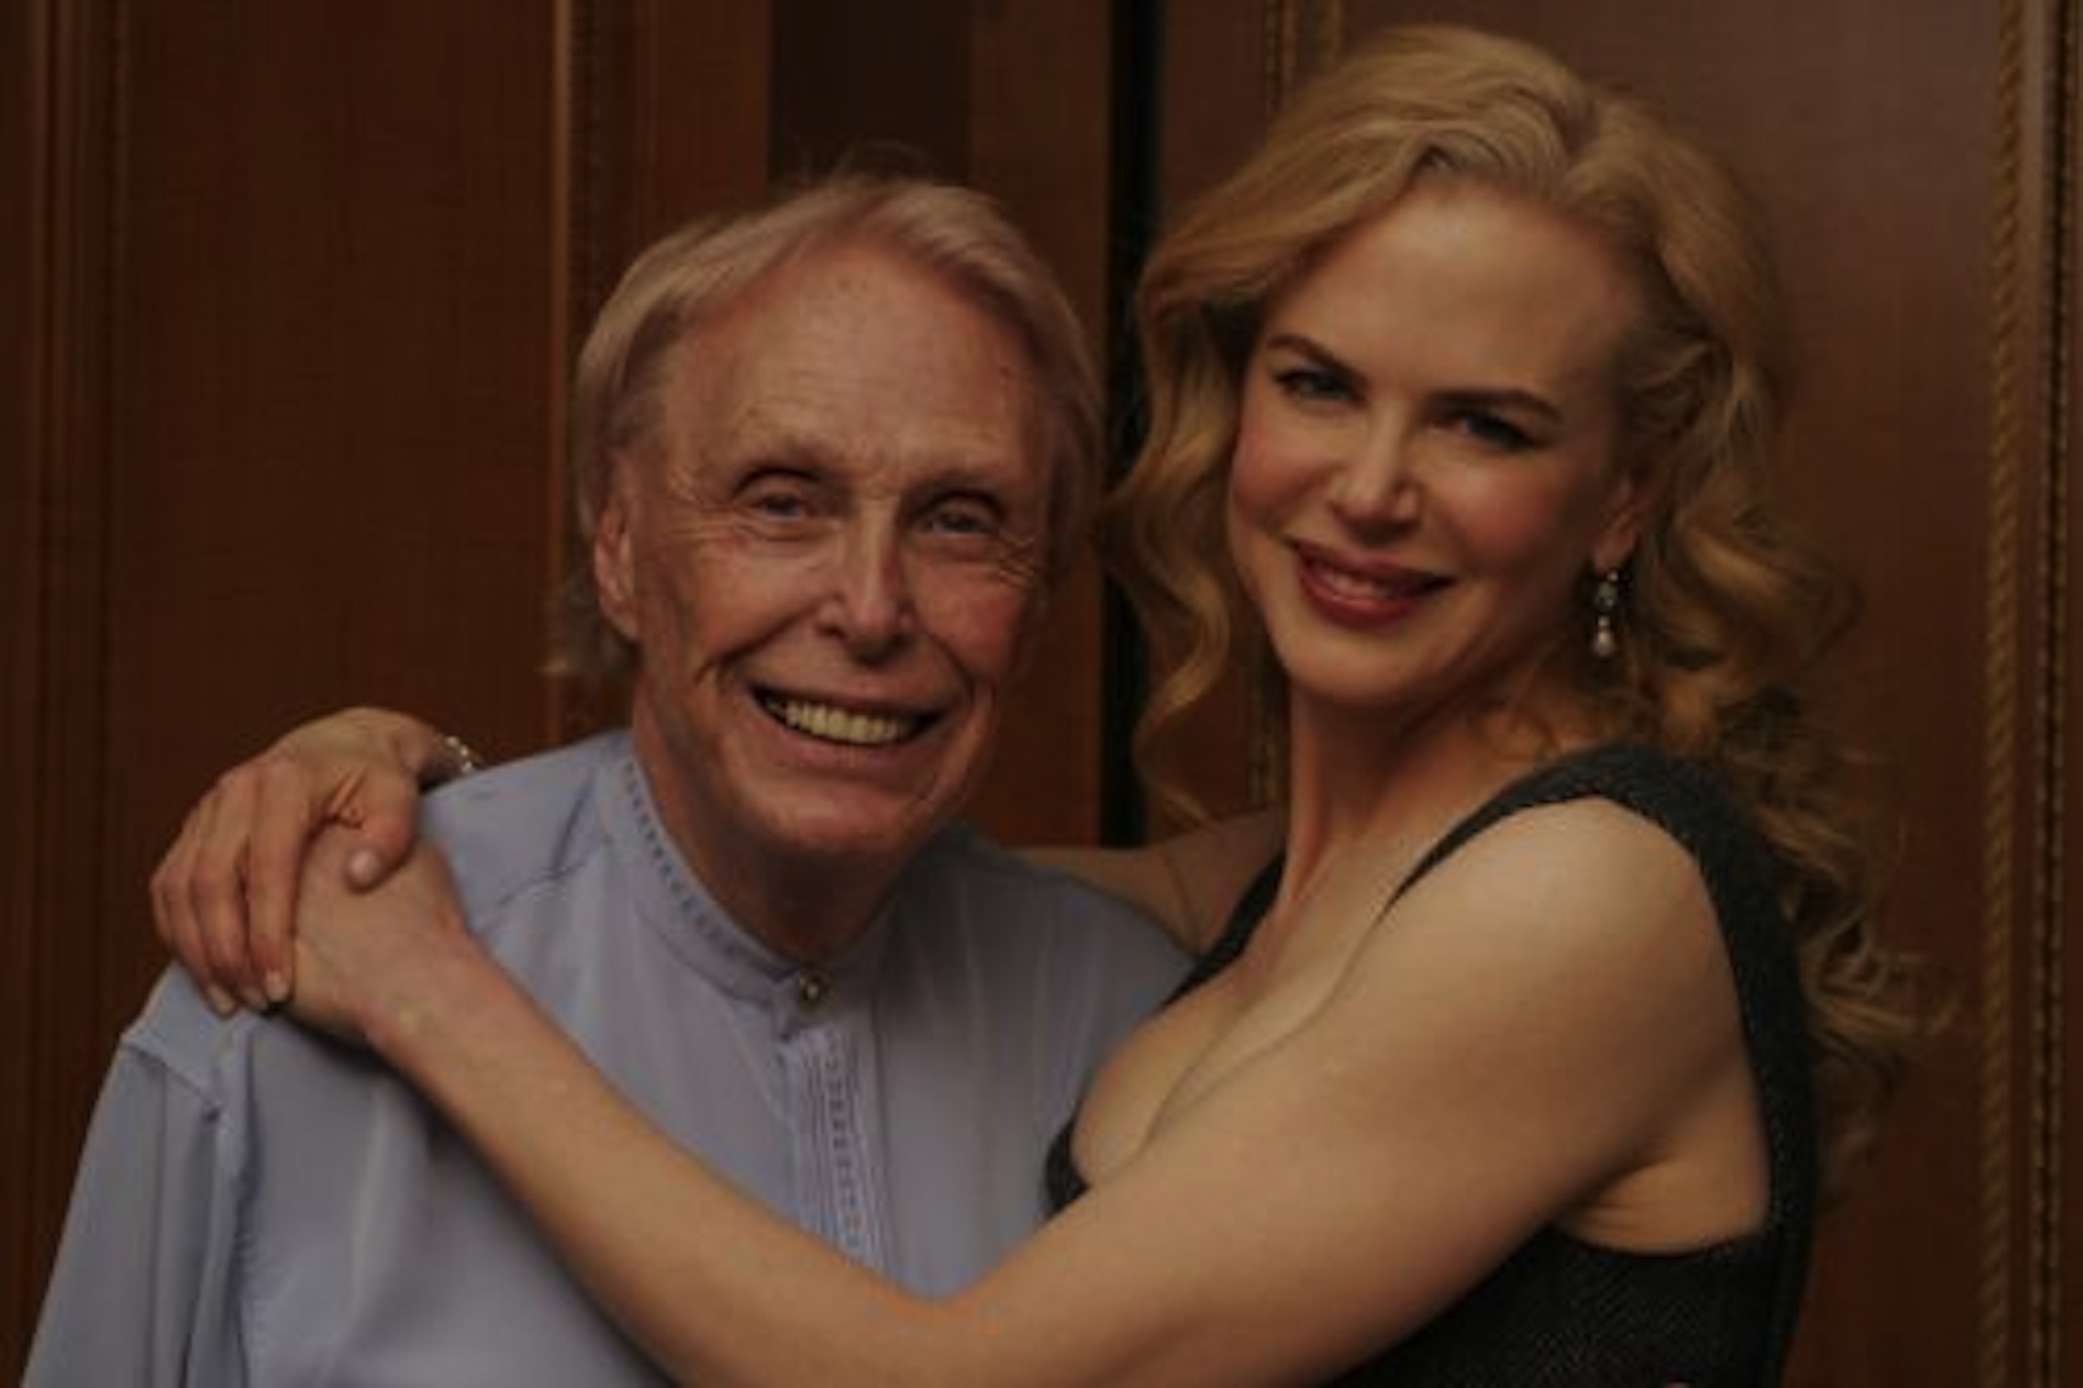 With Nicole Kidman